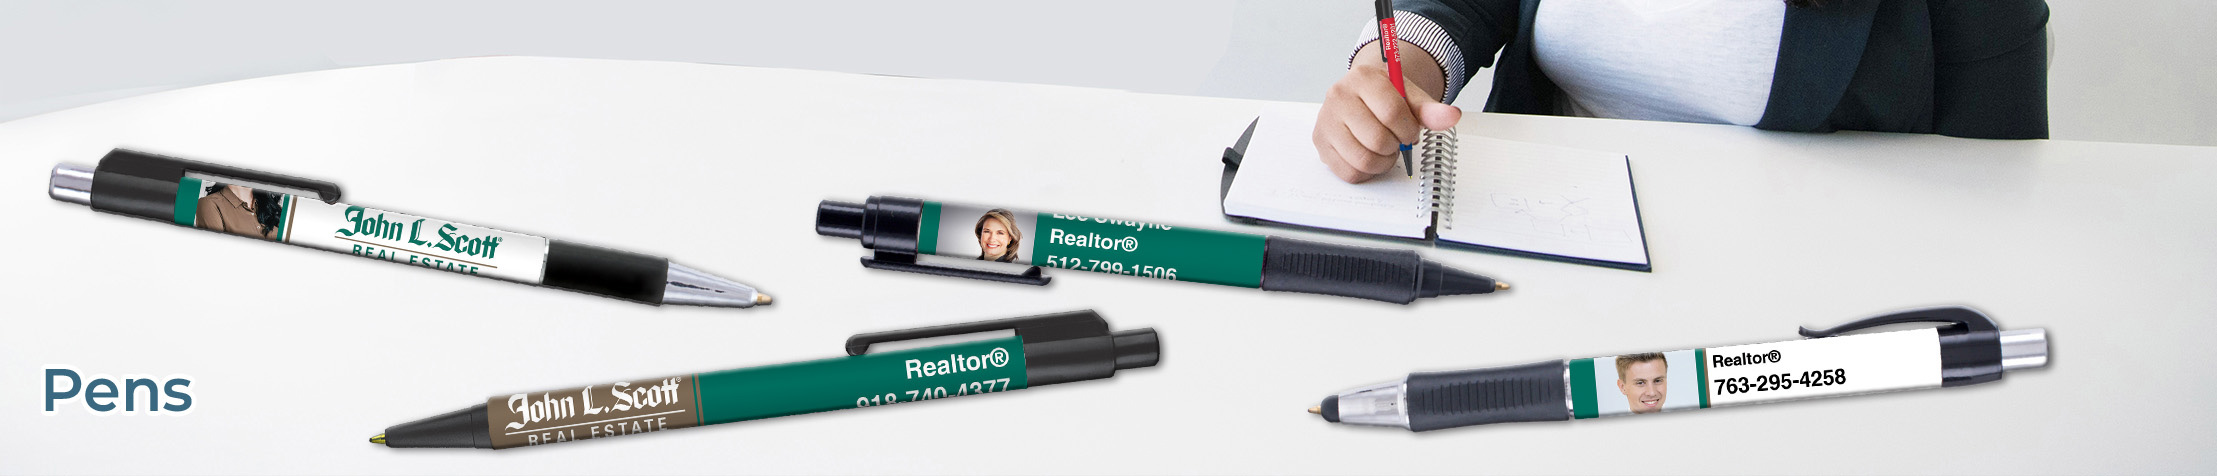 John L. Scott Real Estate Pens - John L. Scott Real Estate personalized realtor promotional products | BestPrintBuy.com